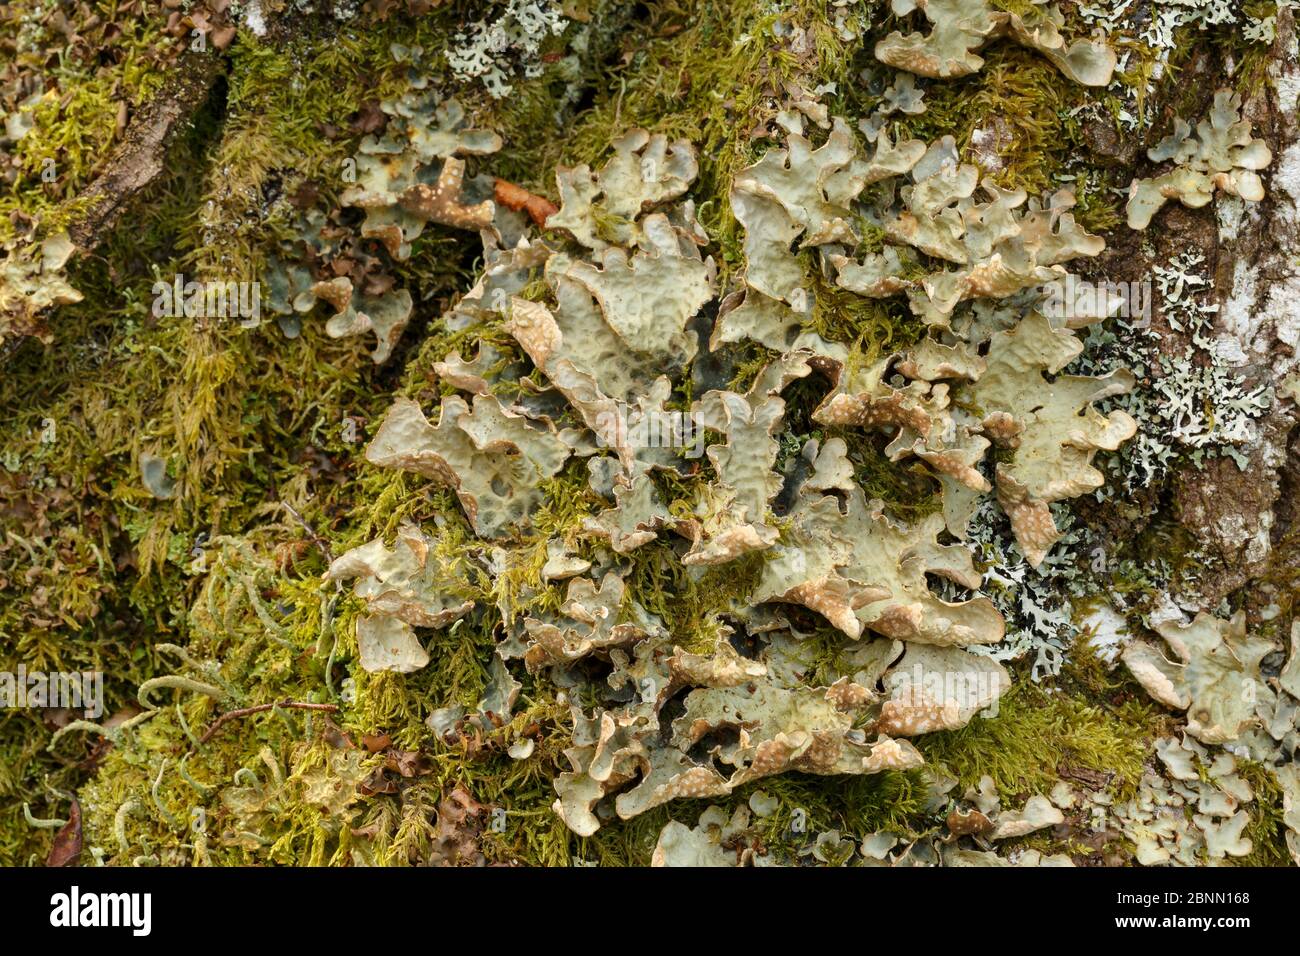 Foliose lichen (Lobaria scrobiculata) on birch bark. Sensitive to pollution. Drumnadrochit, Inverness, Scotland Stock Photo